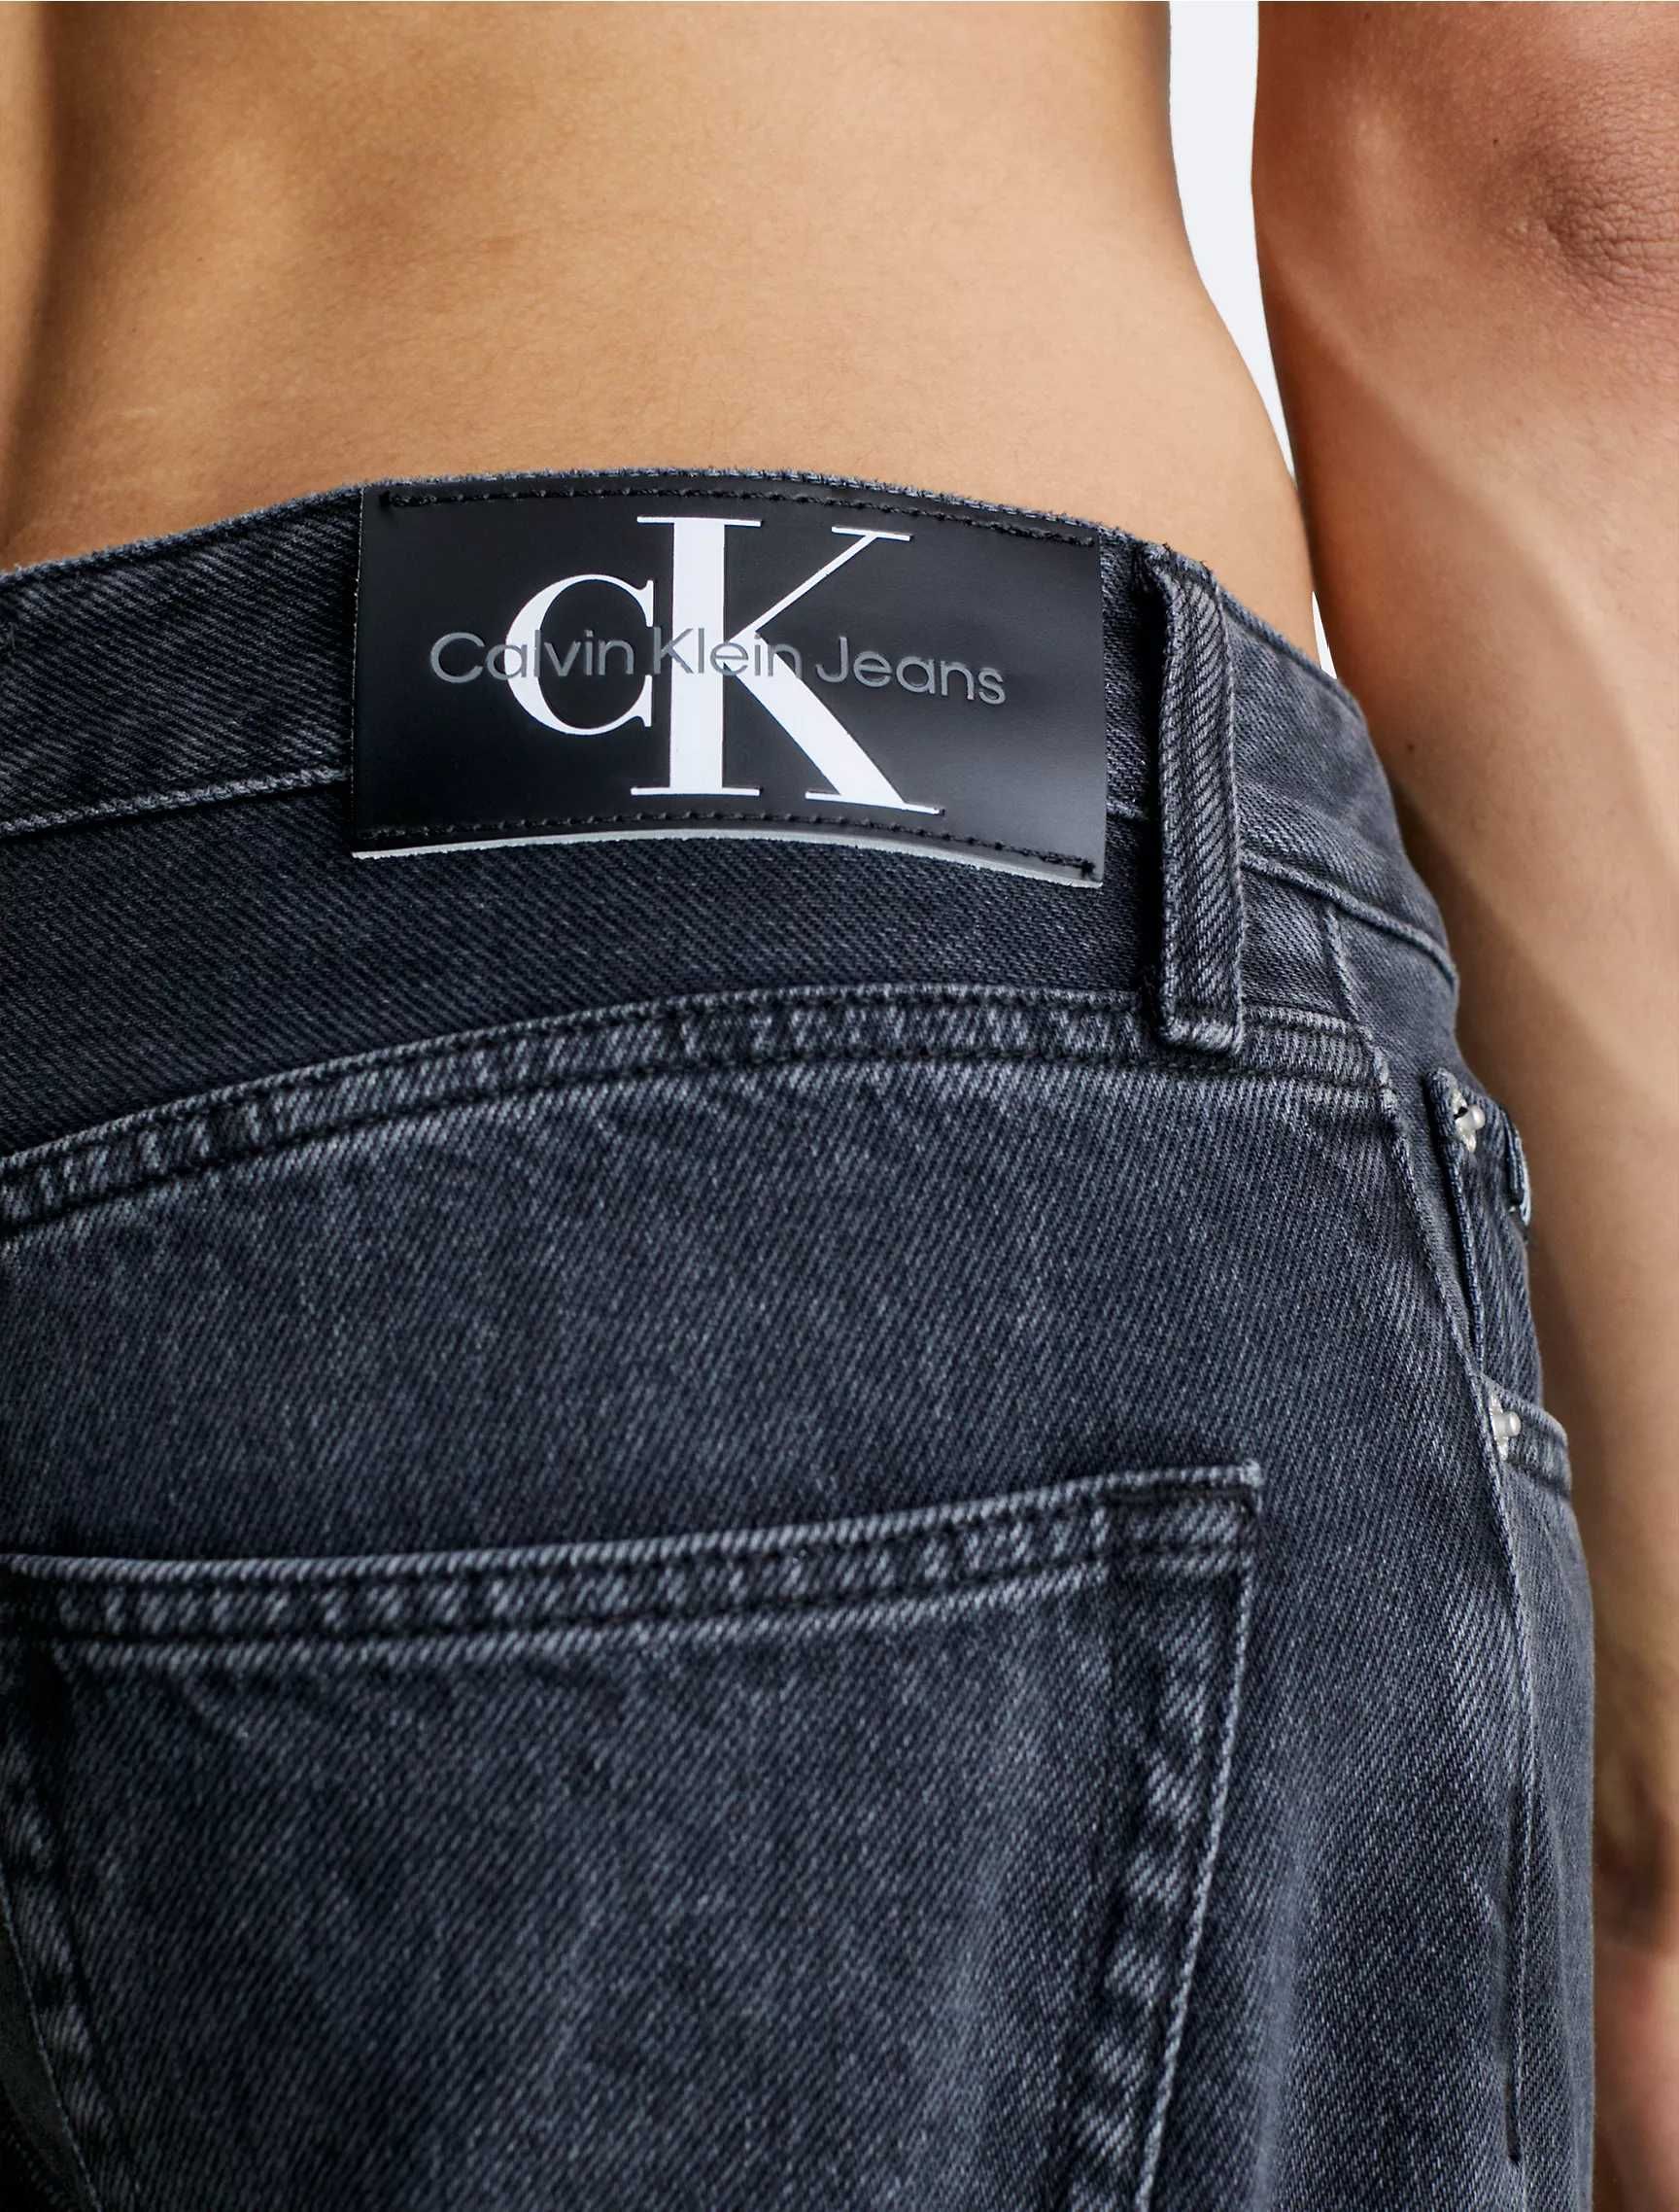 Новые джинсы calvin klein (ck relaxed fit dad jeans) с америки 32m